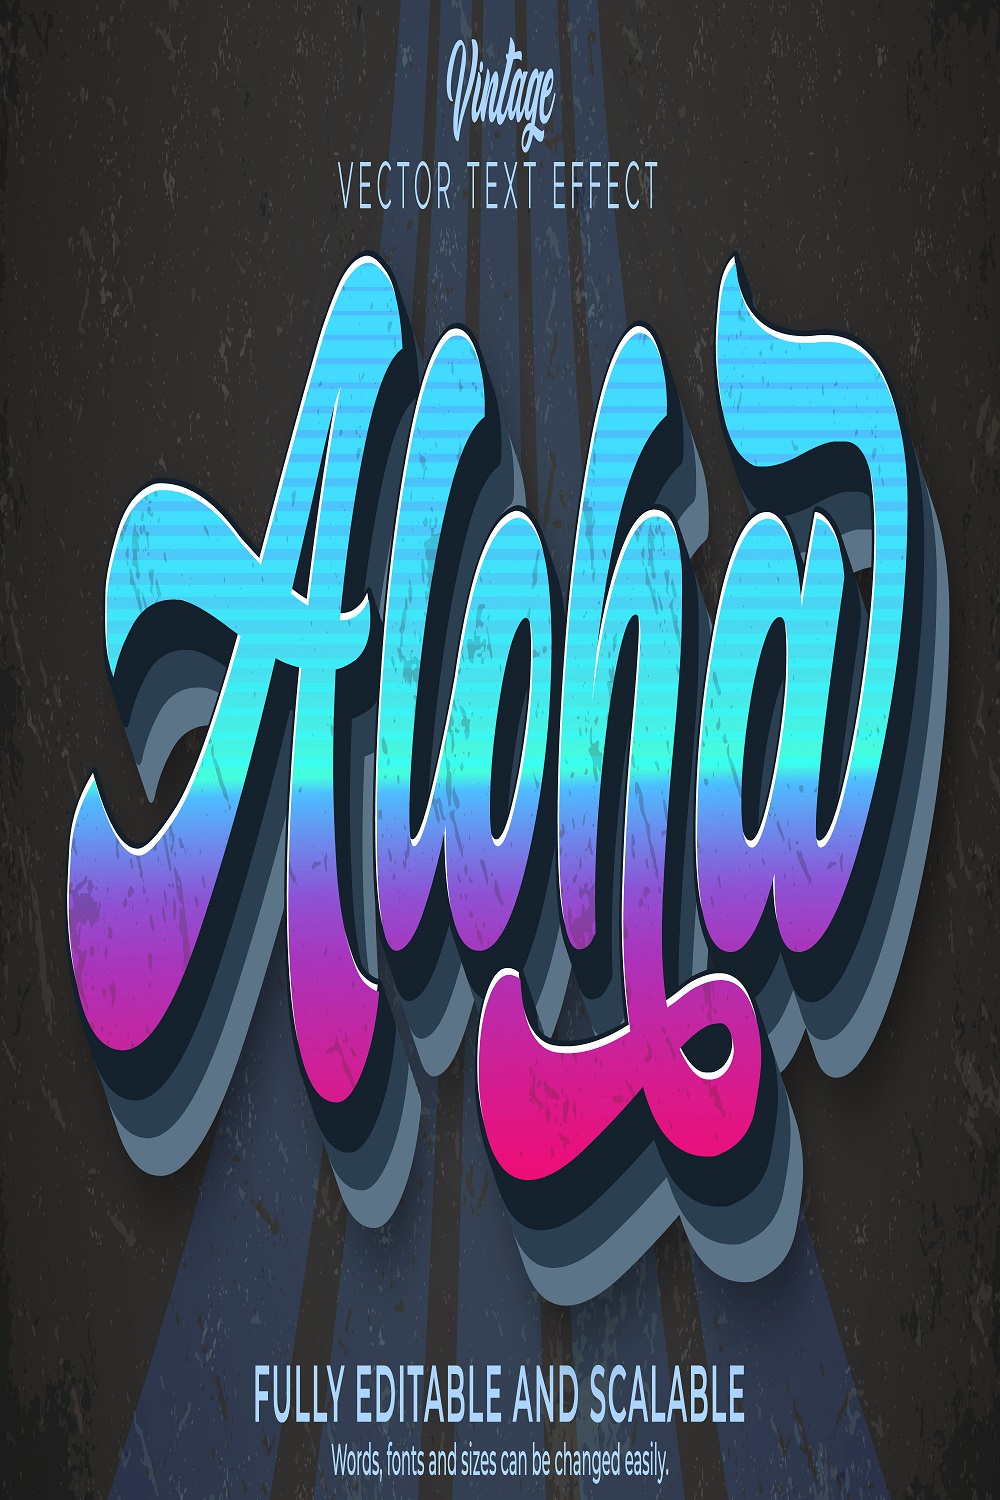 Editable text effect aloha 3d vintage retro font style pinterest preview image.